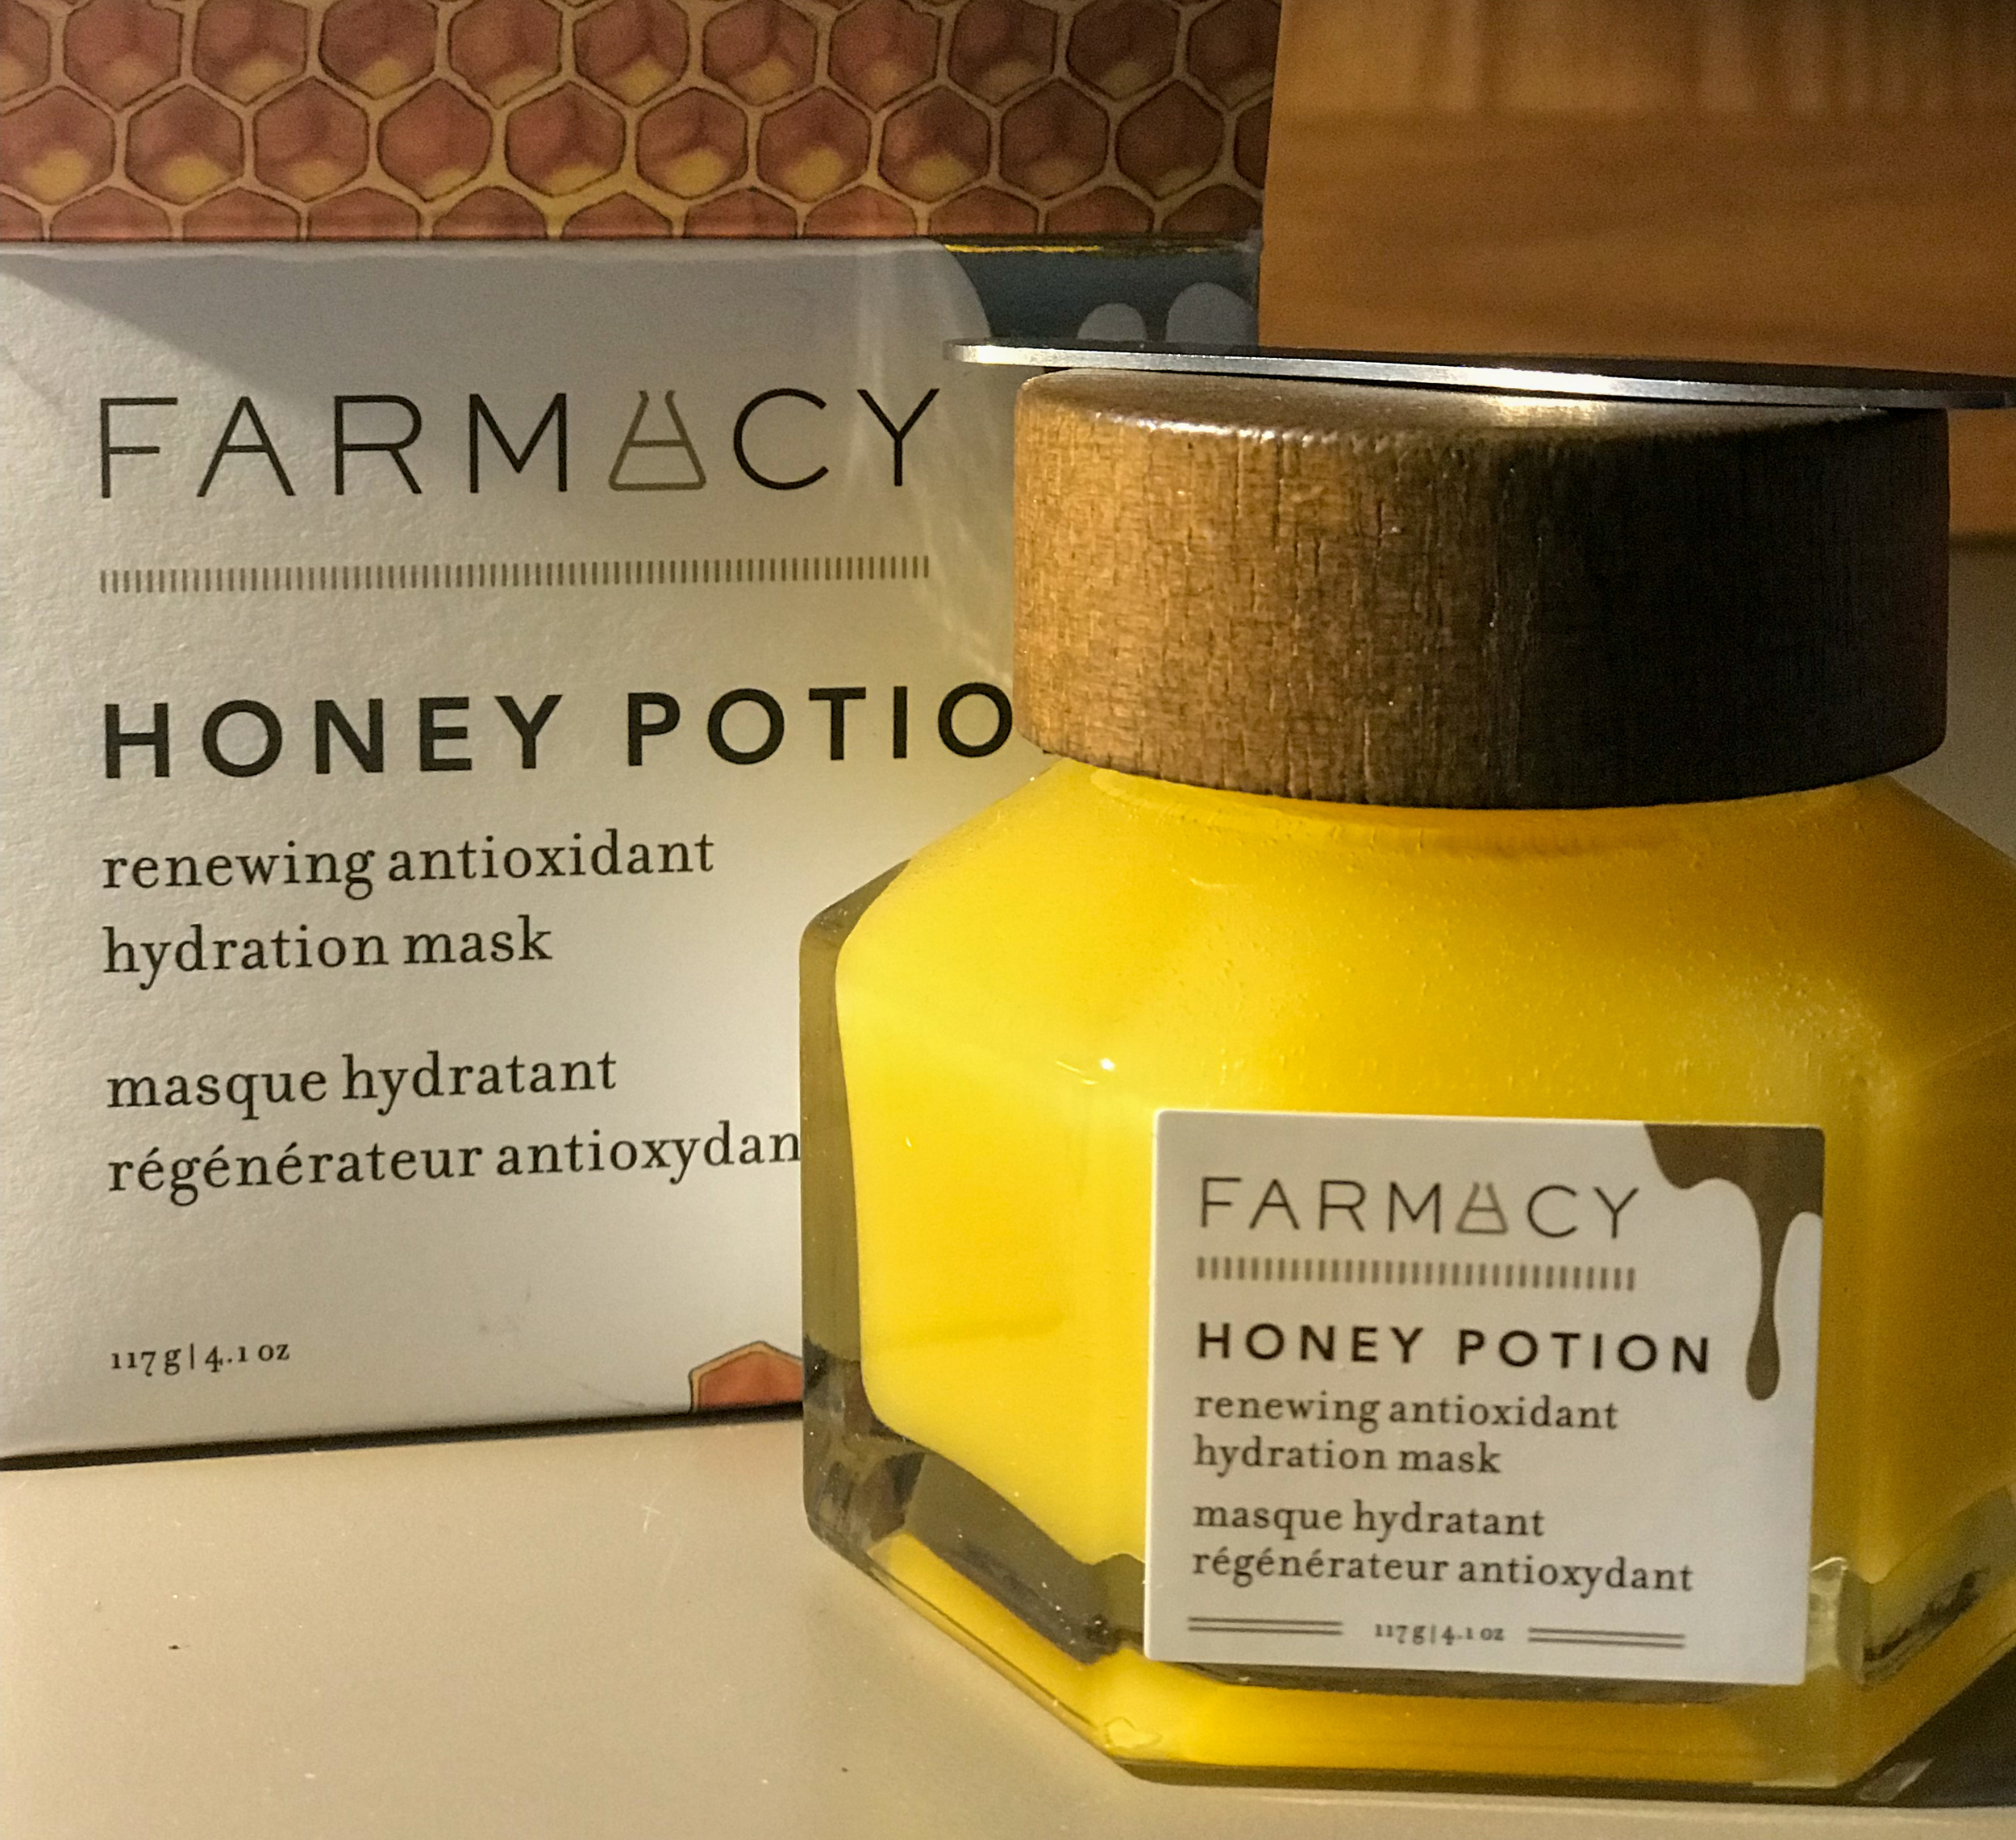 Farmacy Honey Potion Pic - Home